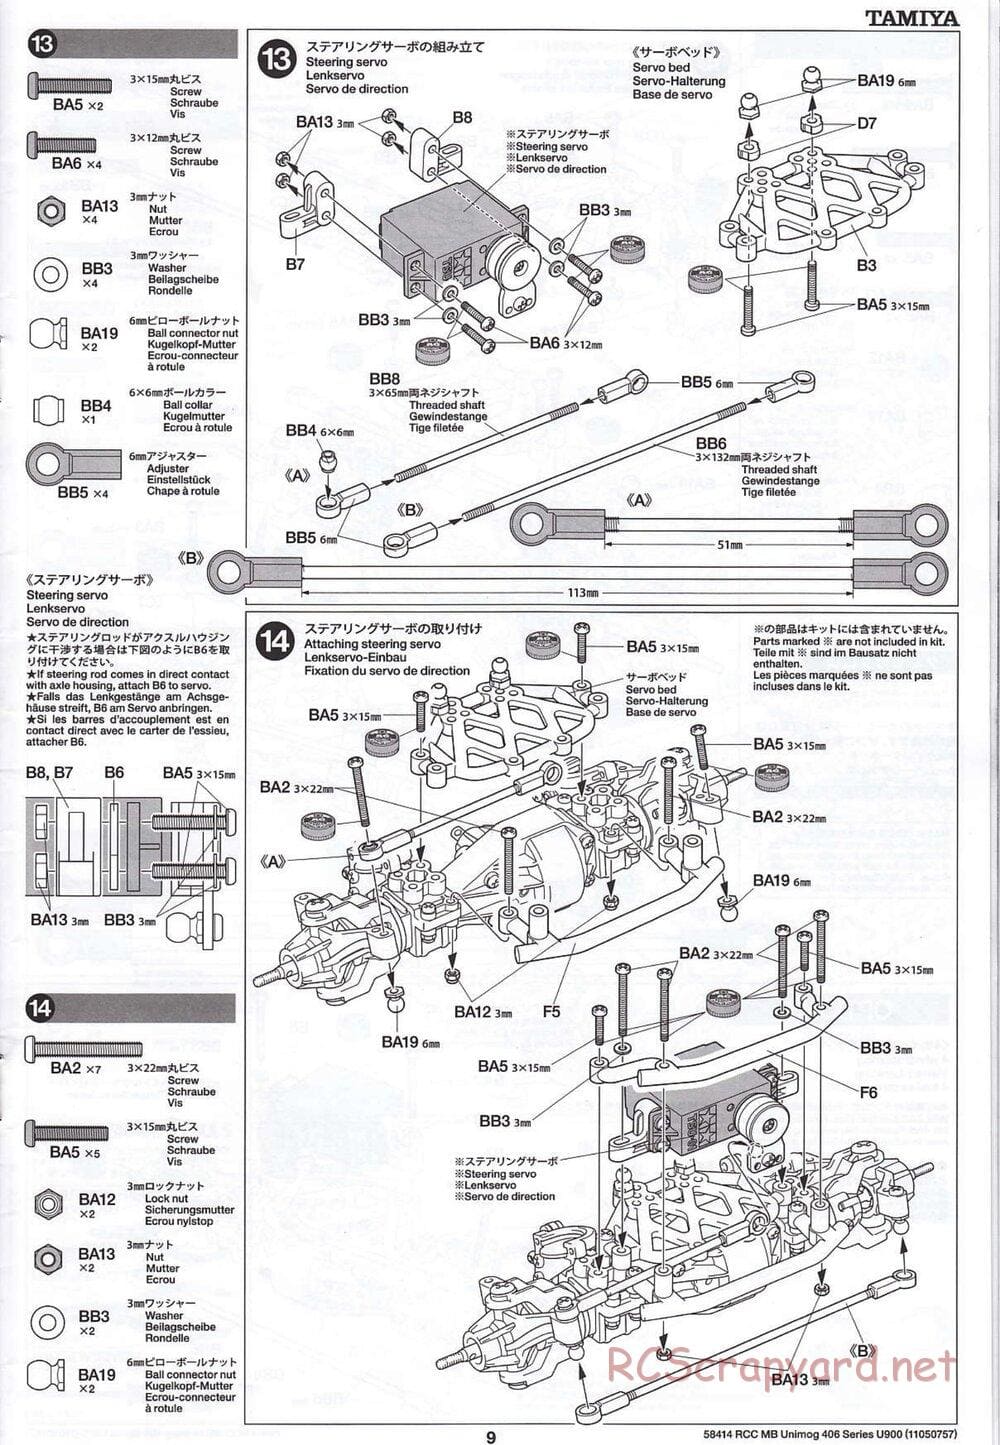 Tamiya - Mercedes-Benz Unimog 406 Series U900 - CR-01 Chassis - Manual - Page 9